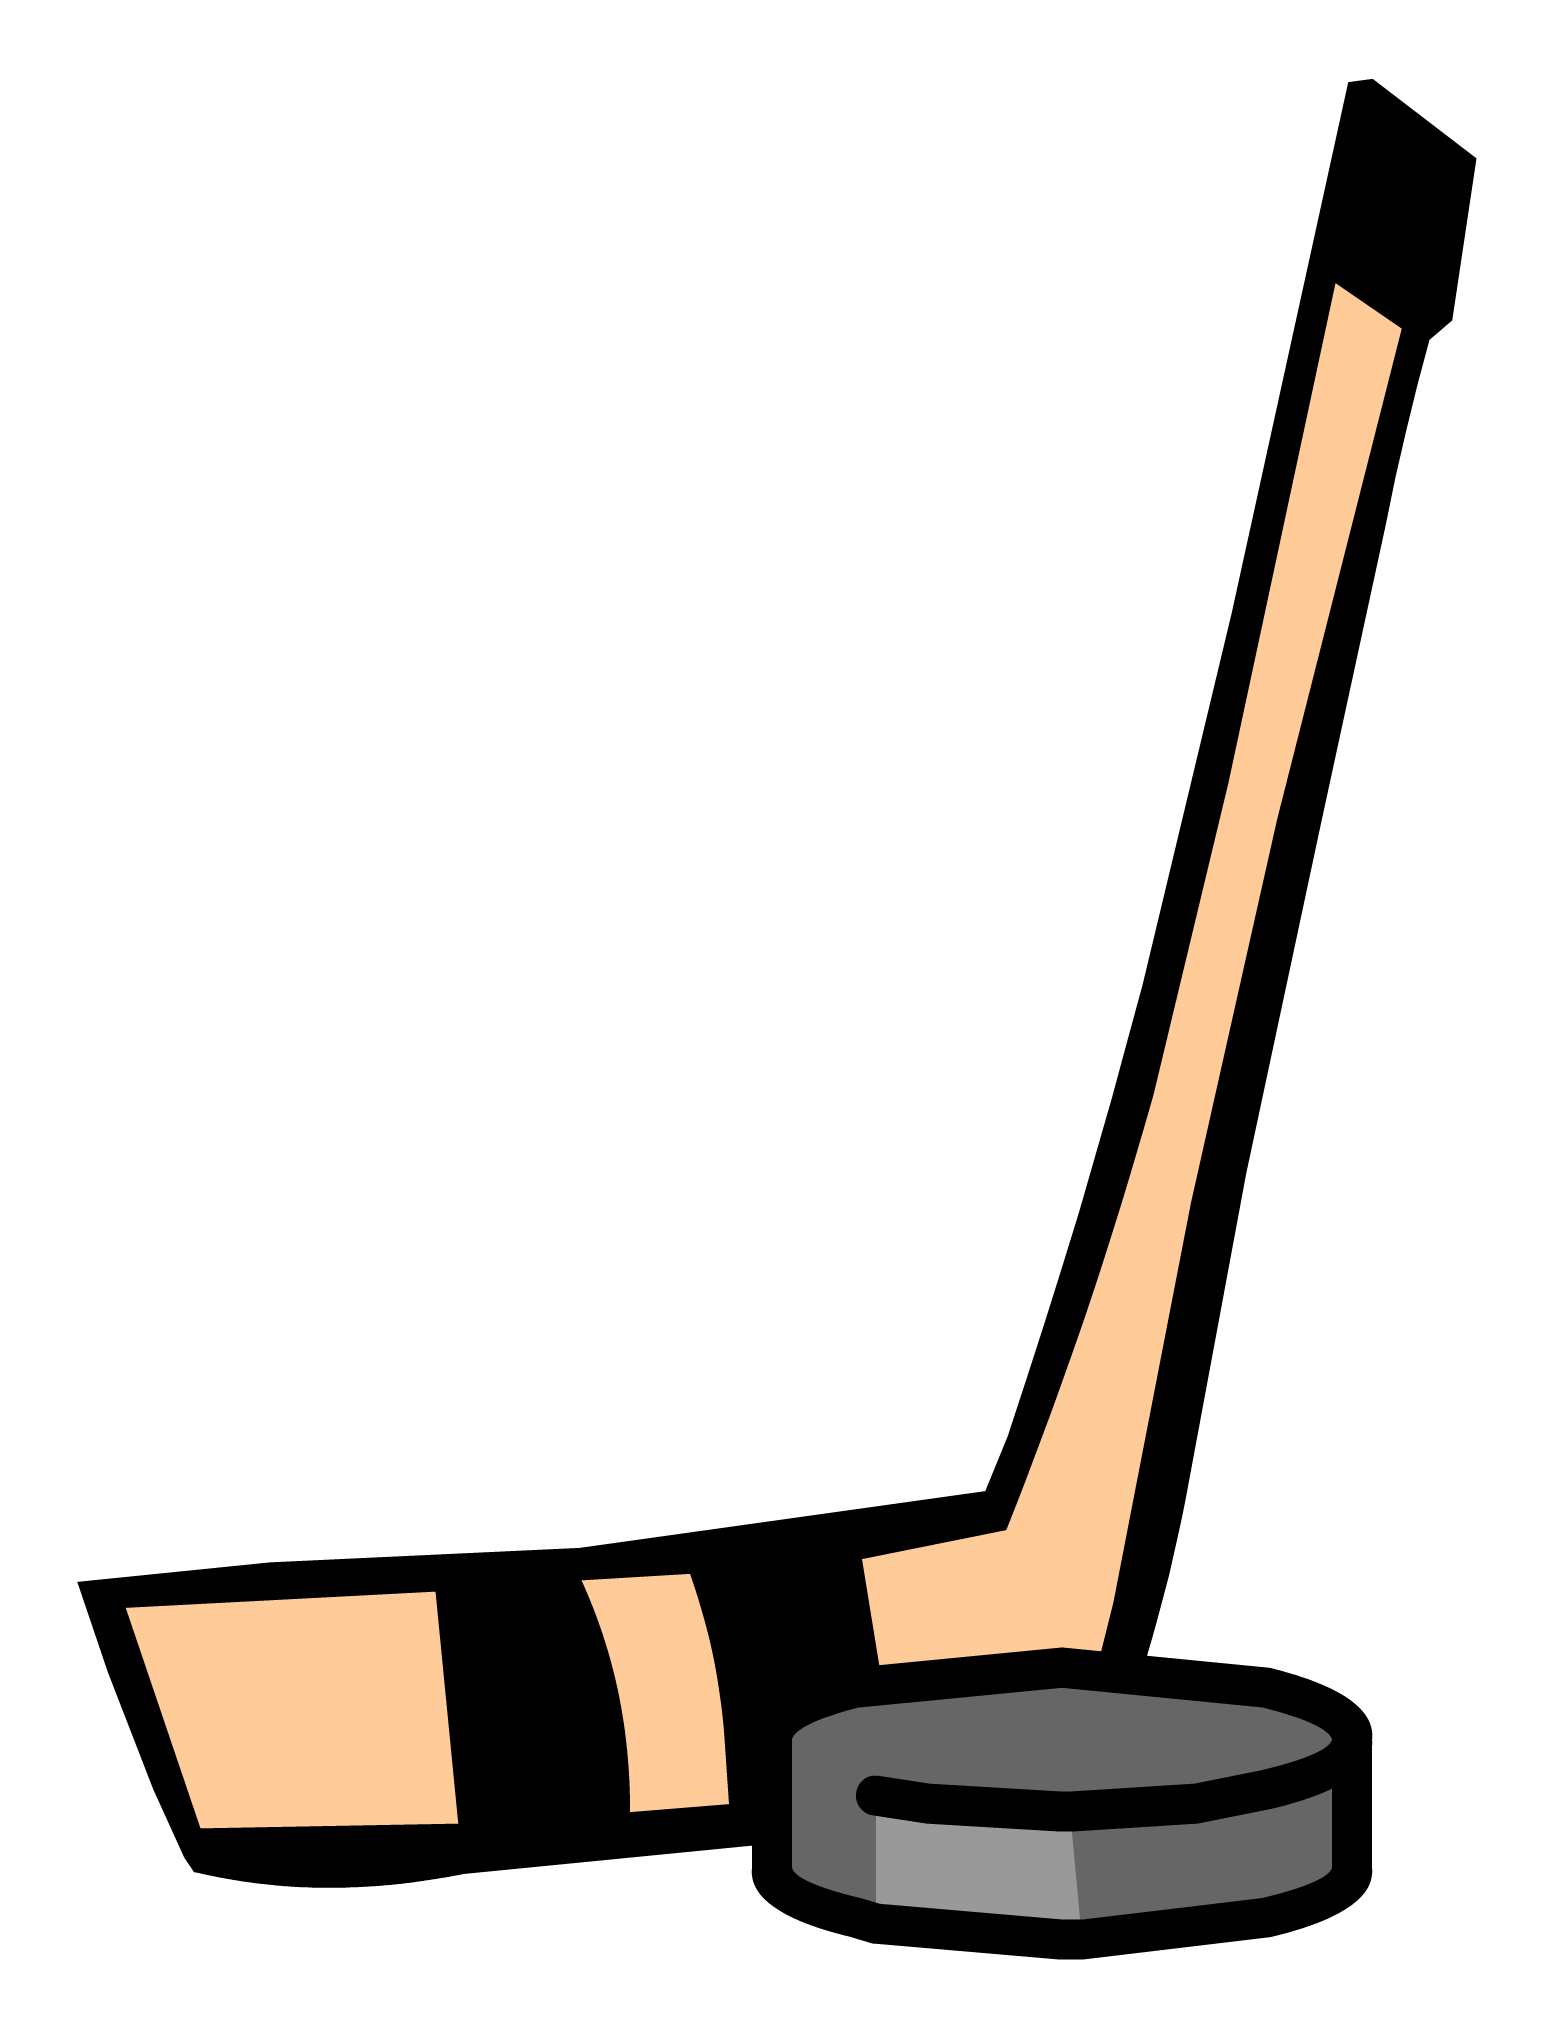 clipart ball hockey stick